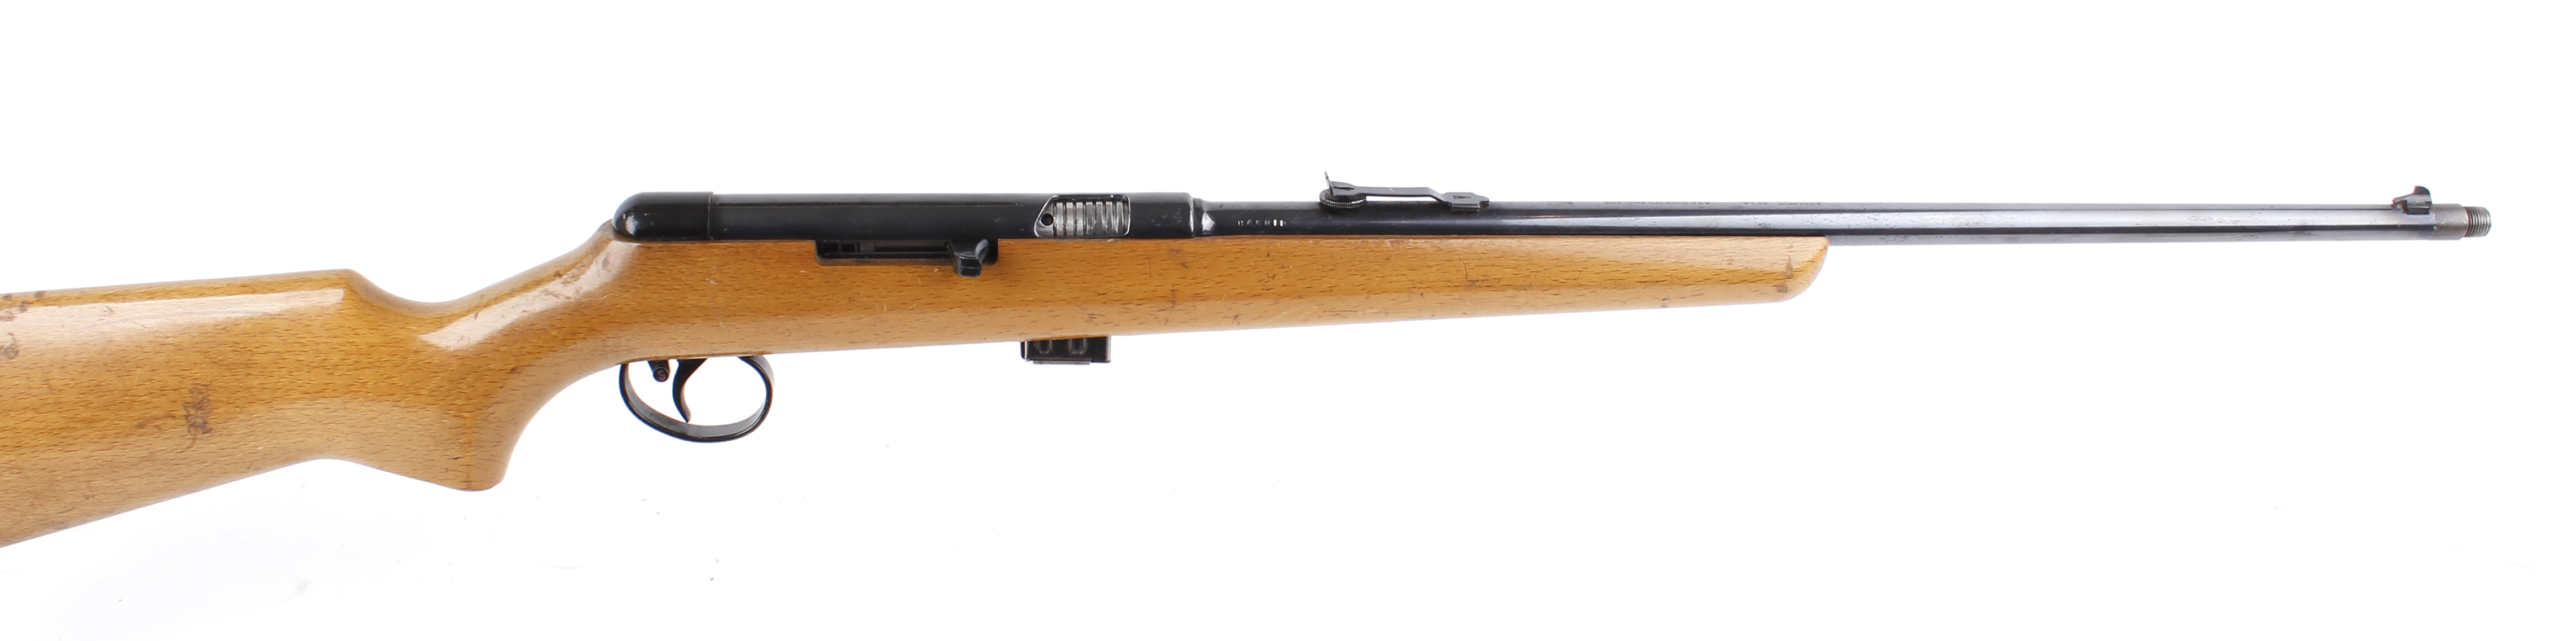 .22 BSA Airmatic semi automatic rifle, 5 shot, threaded for moderator, open sights, no. HA5811 (